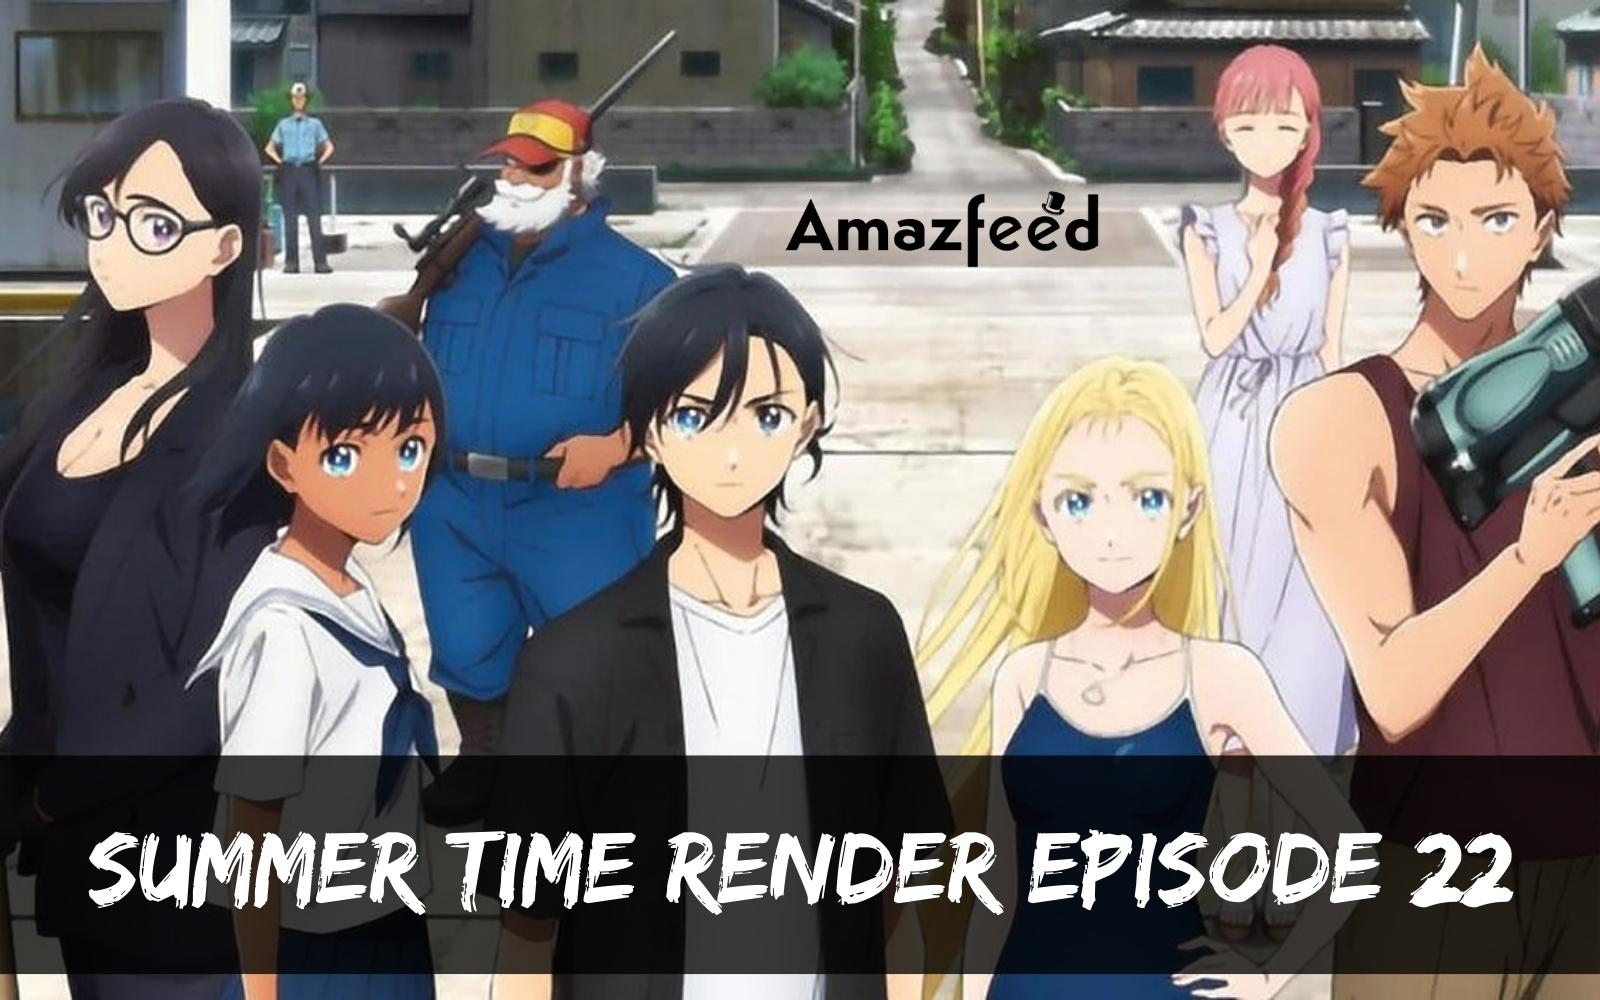 Summertime Render Episode 22 : Countdown, Release Date, Recap, Cast, Spoiler & Where to Watch